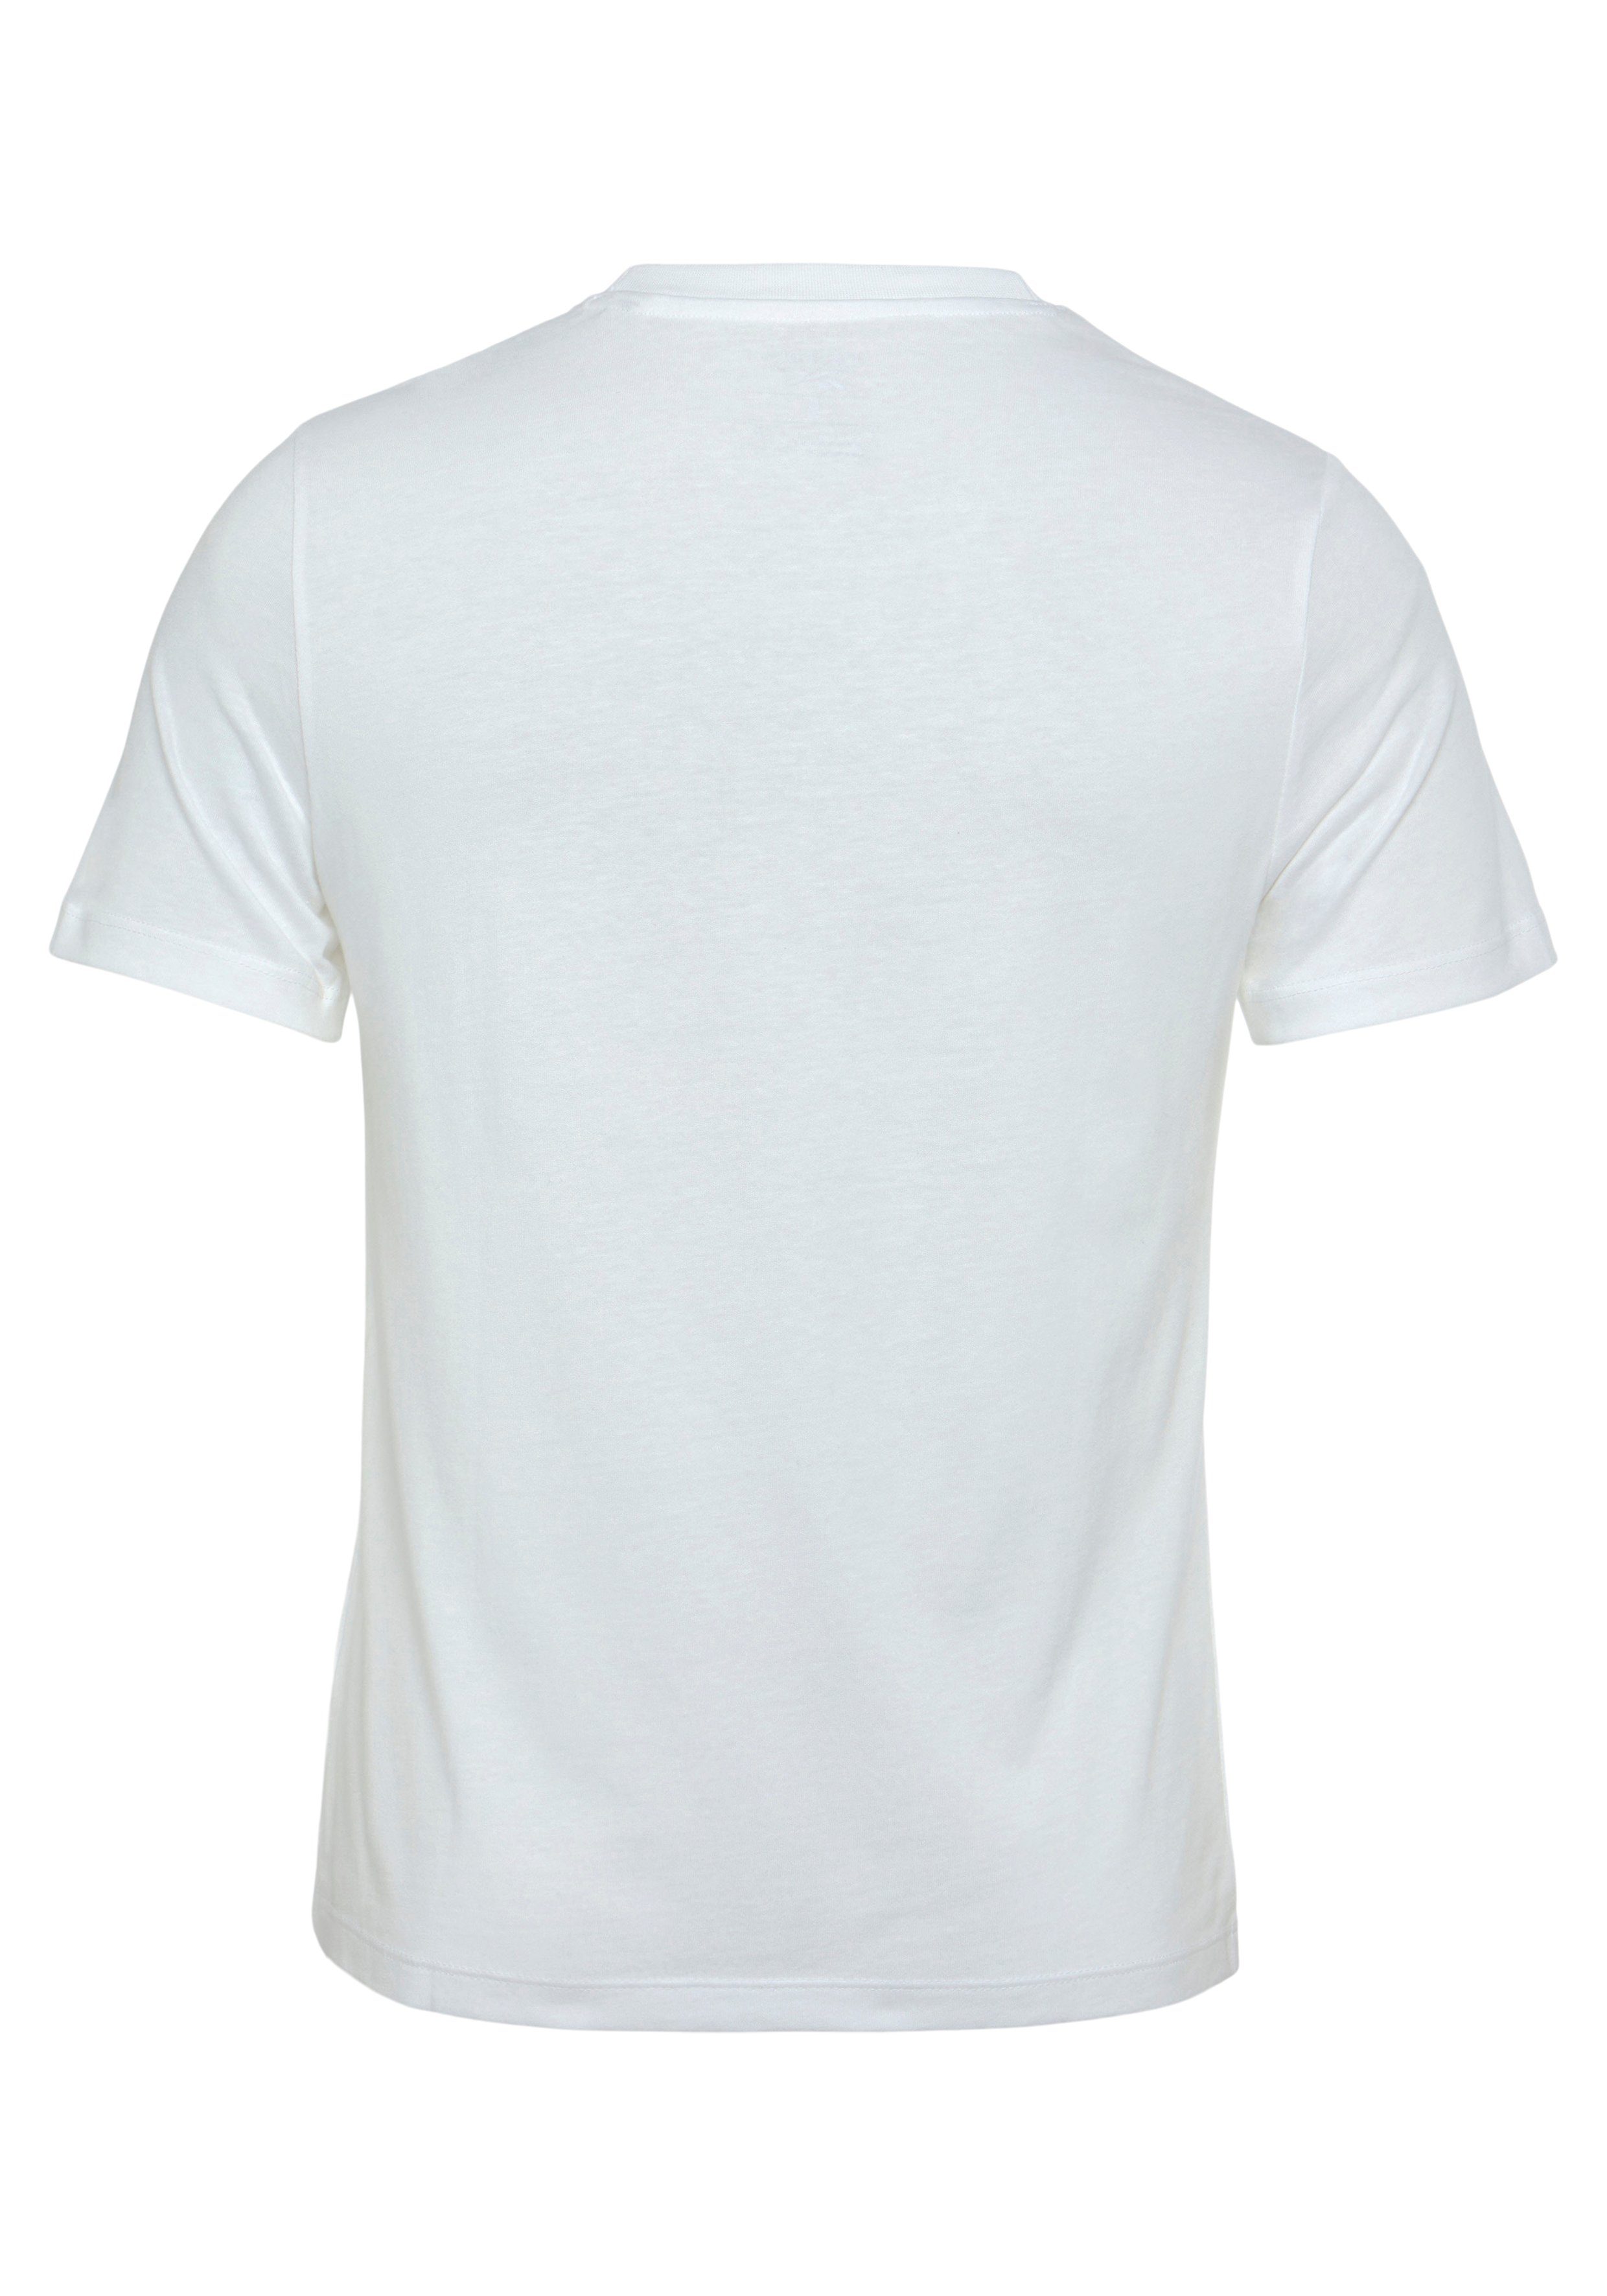 Reebok T-Shirt Tee white Graphic Reebok Read